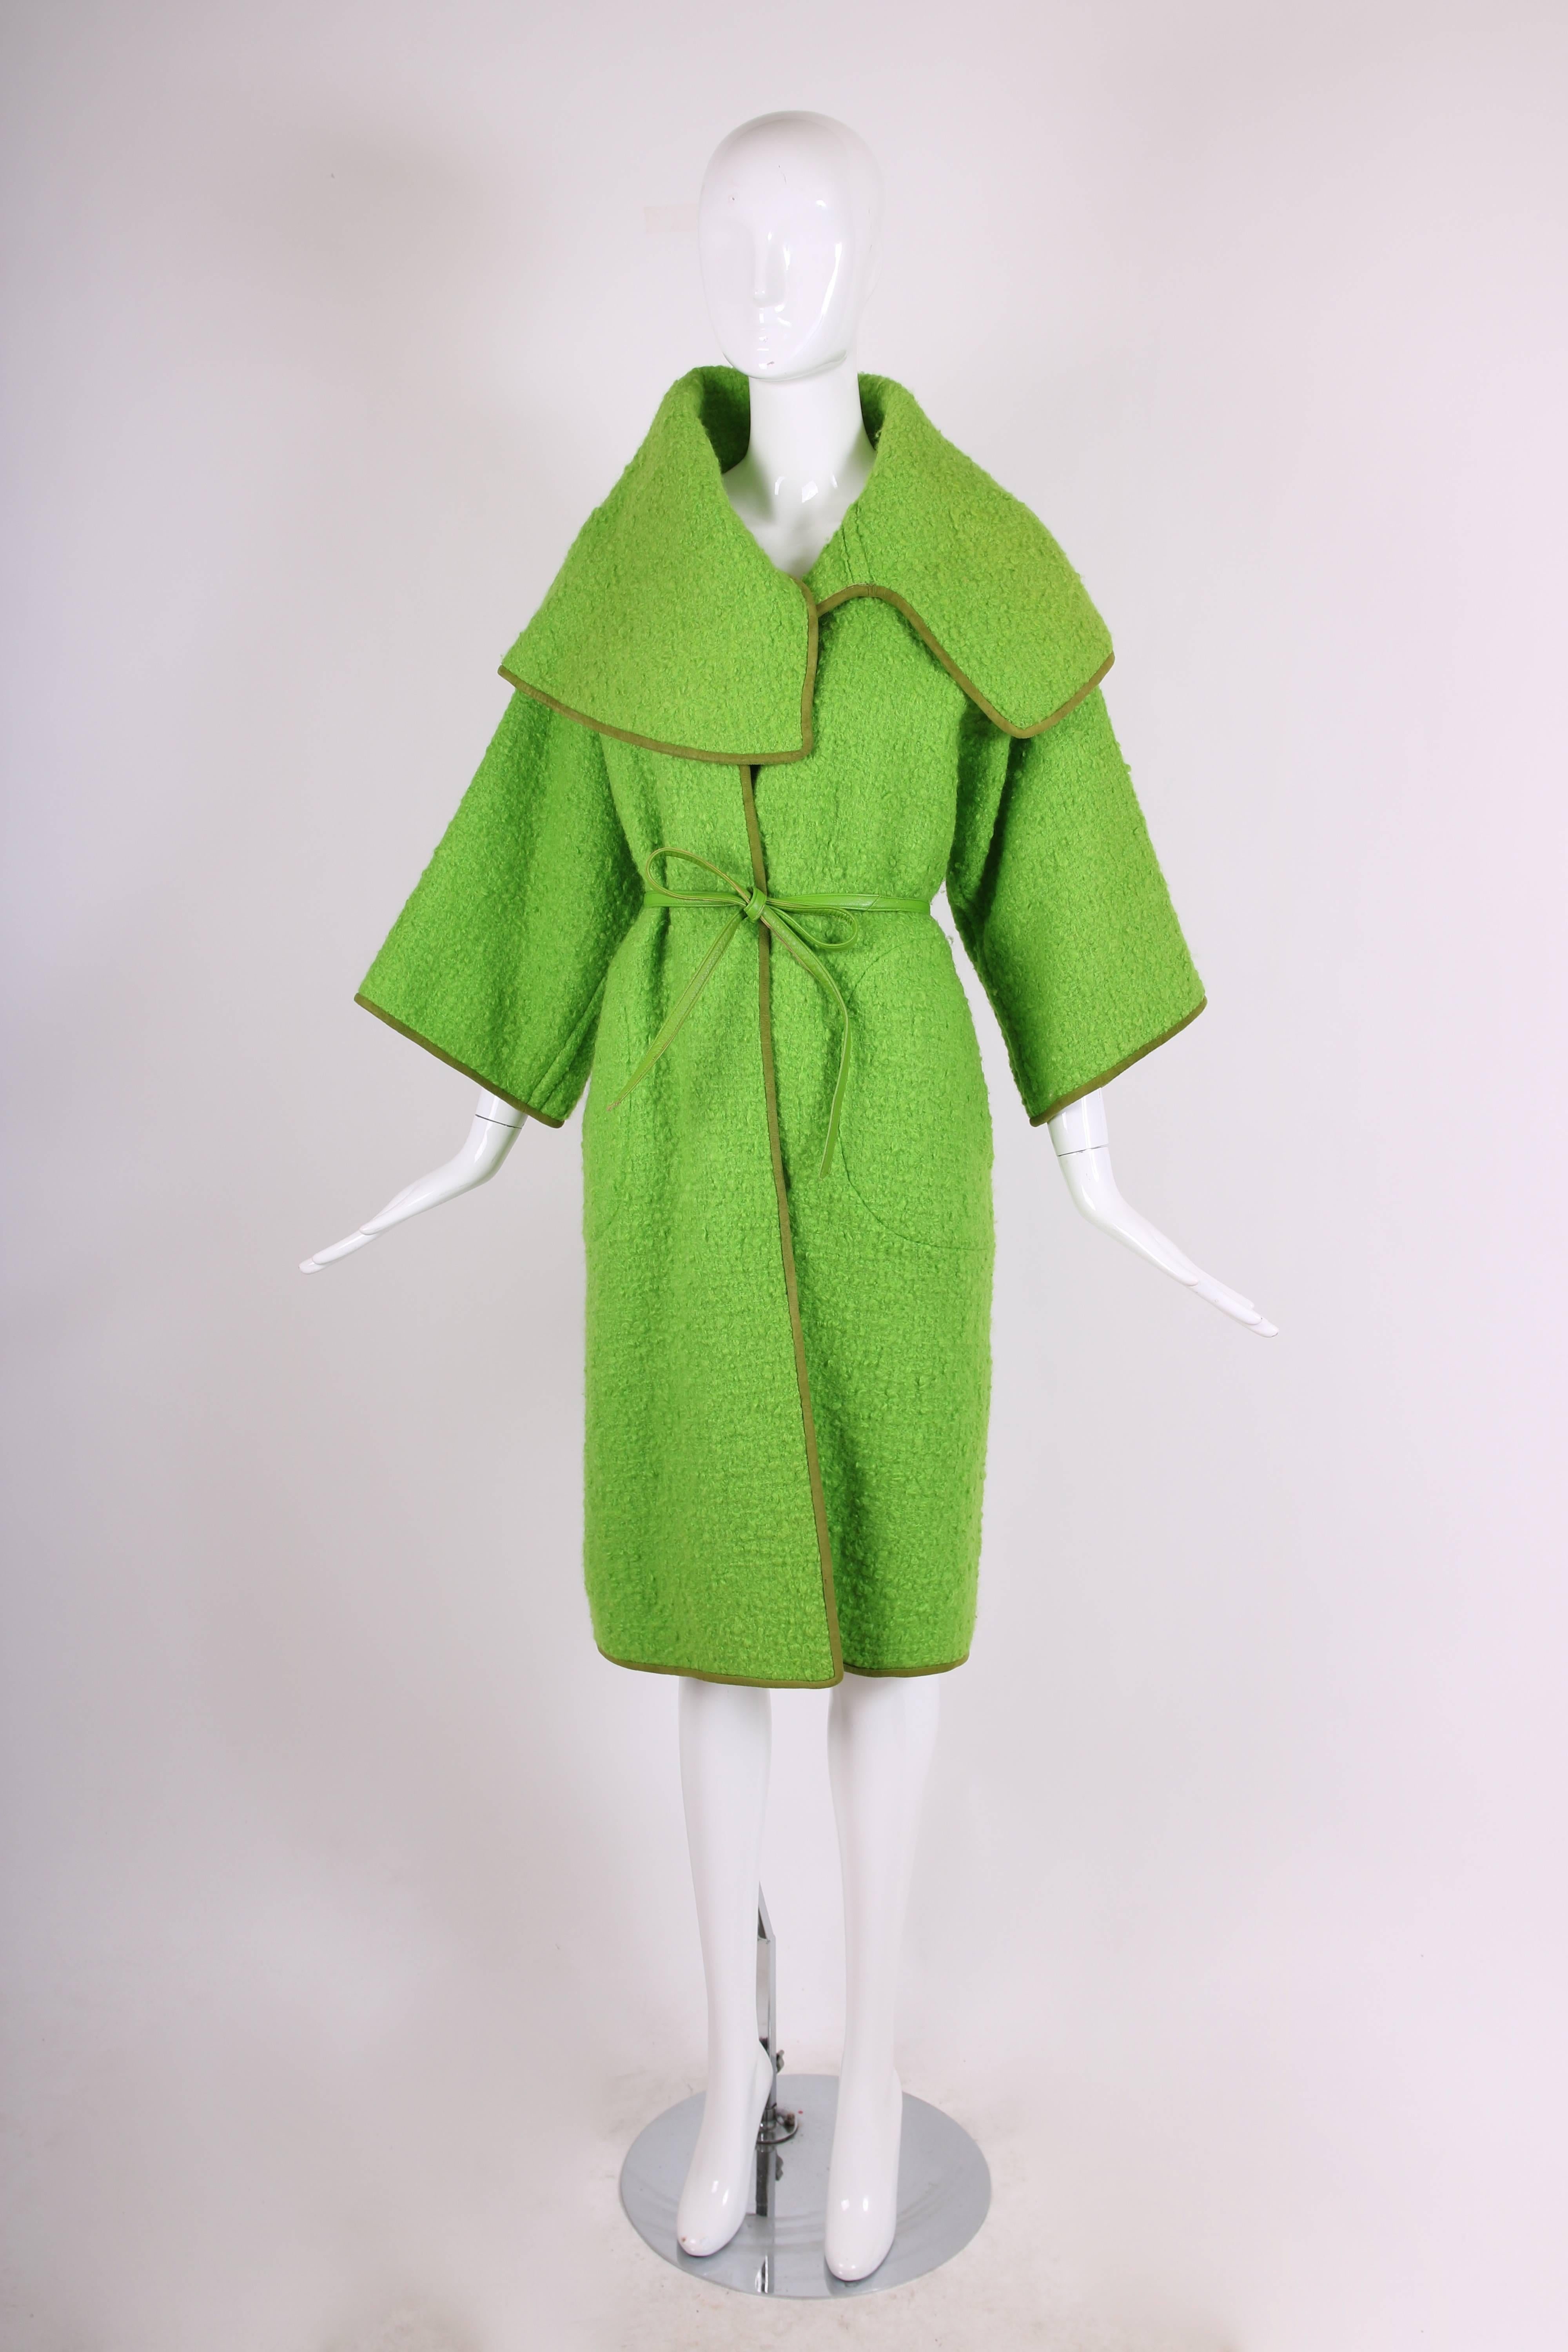 Women's Bonnie Cashin for Sills Lime Green Boucle Wool Coat circa 1960s